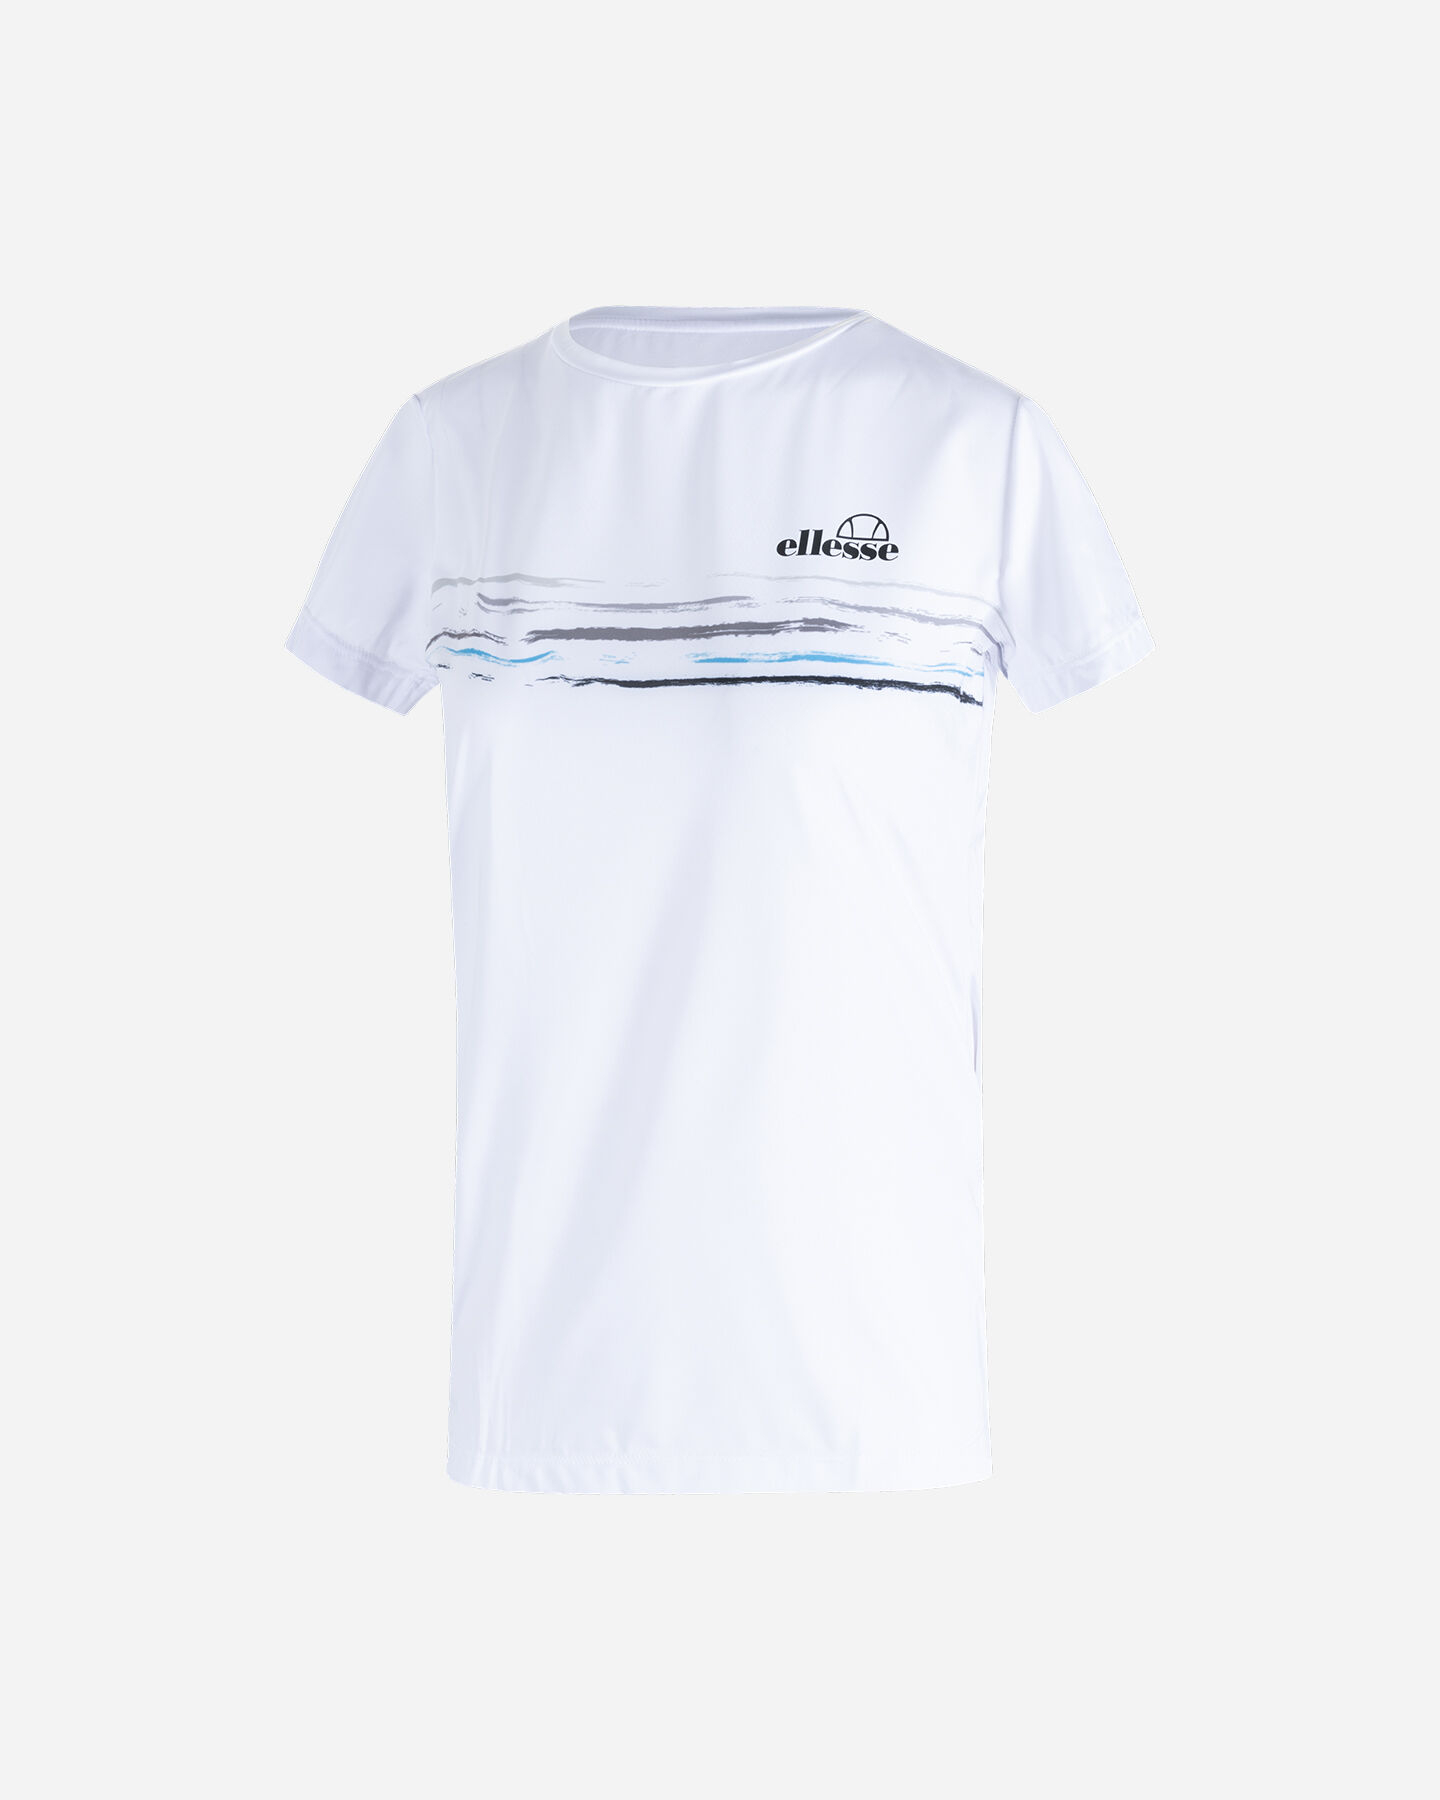  T-Shirt tennis ELLESSE FIVE STRIPES W S4117584|001|S scatto 5